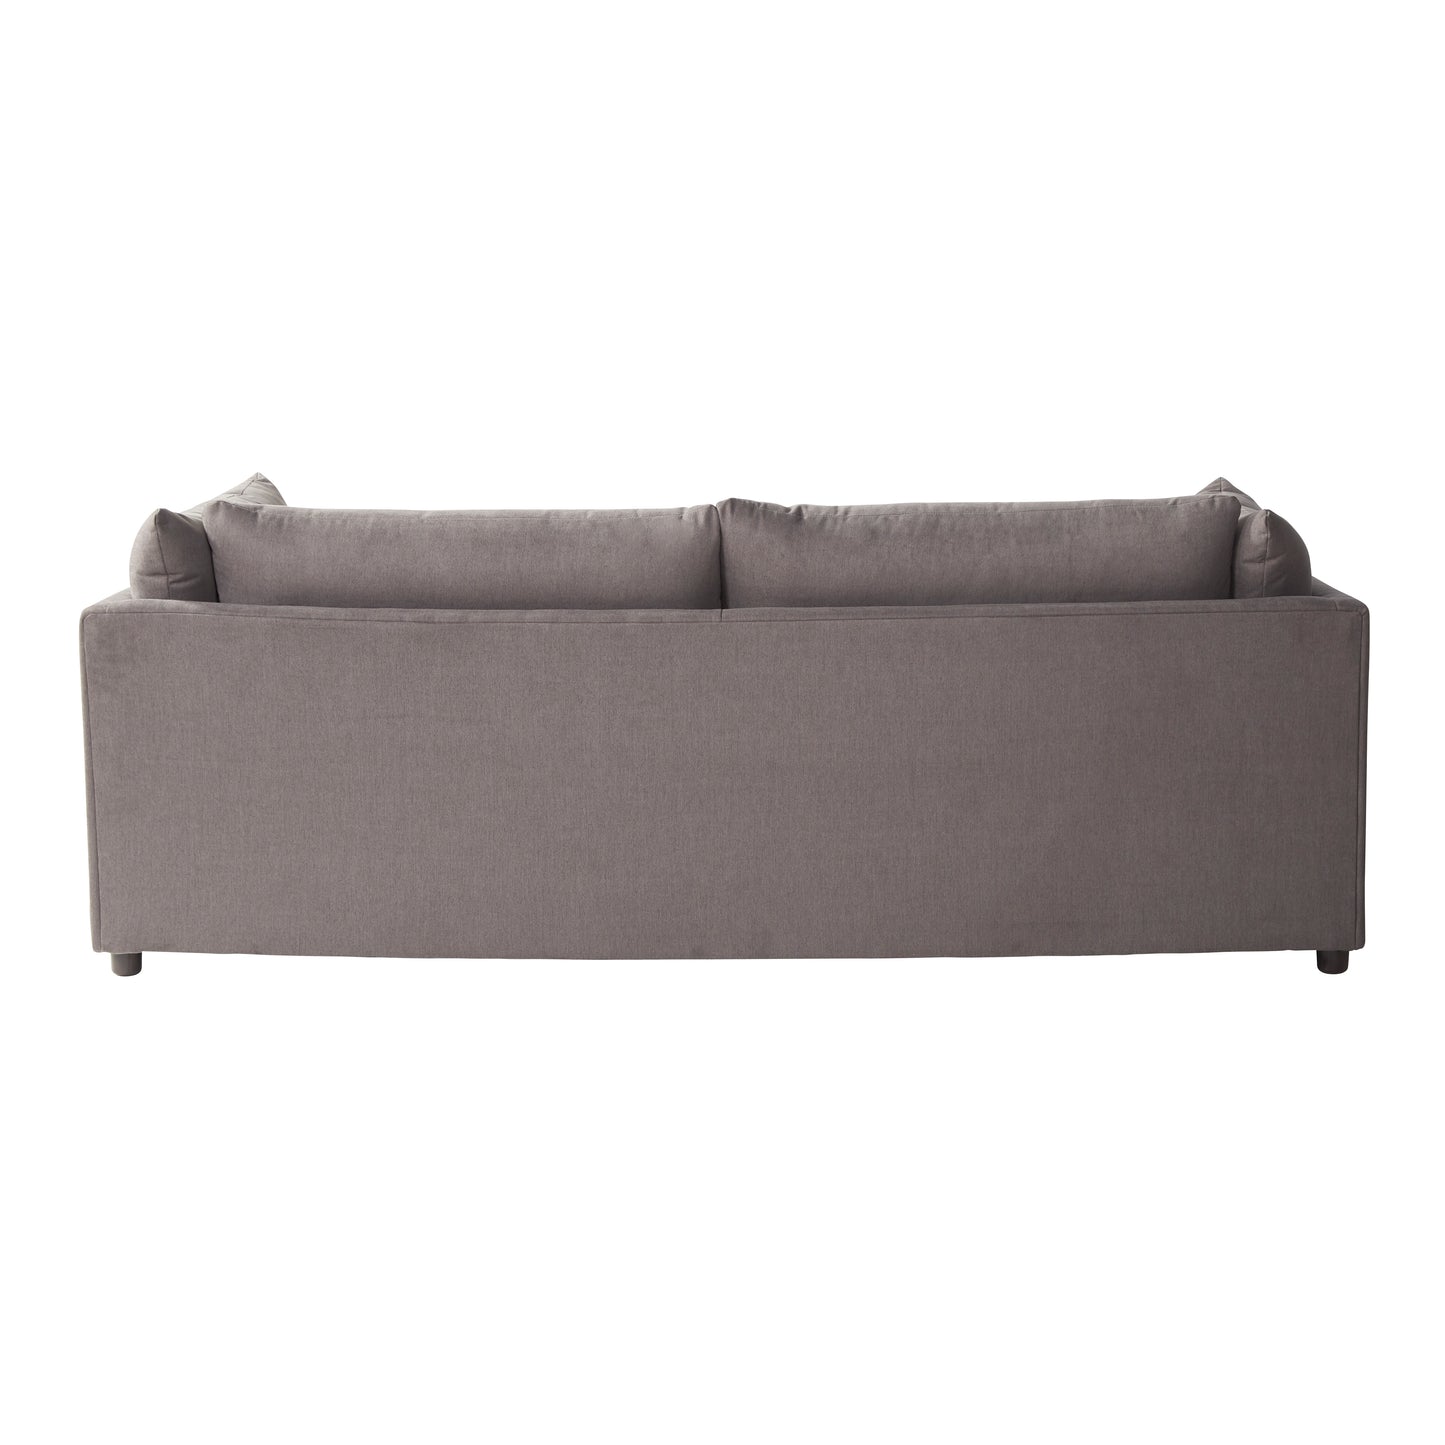 Roundhill Furniture Enda Pillow Back Fabric Sofa, Carbon Gray